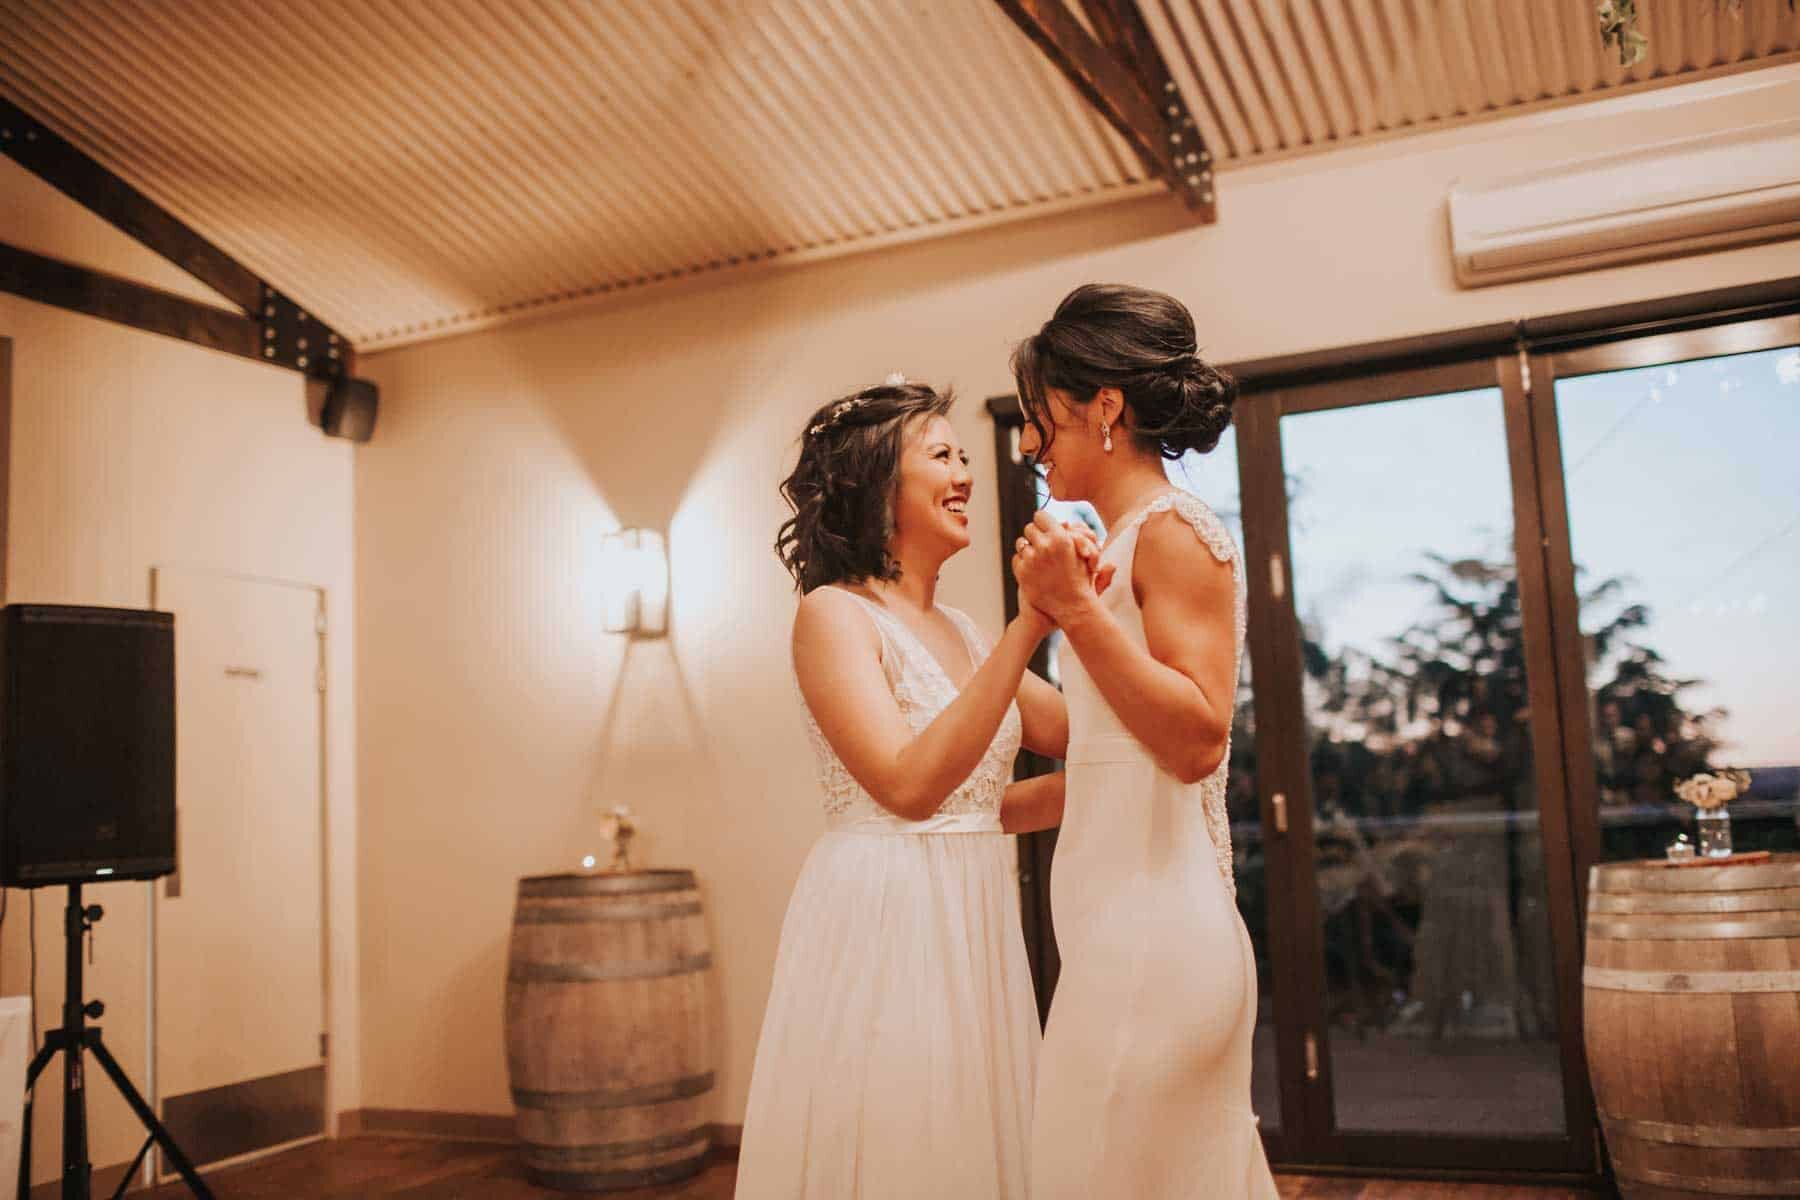 Mount Macedon Winery wedding - photography by Lakshal Perera